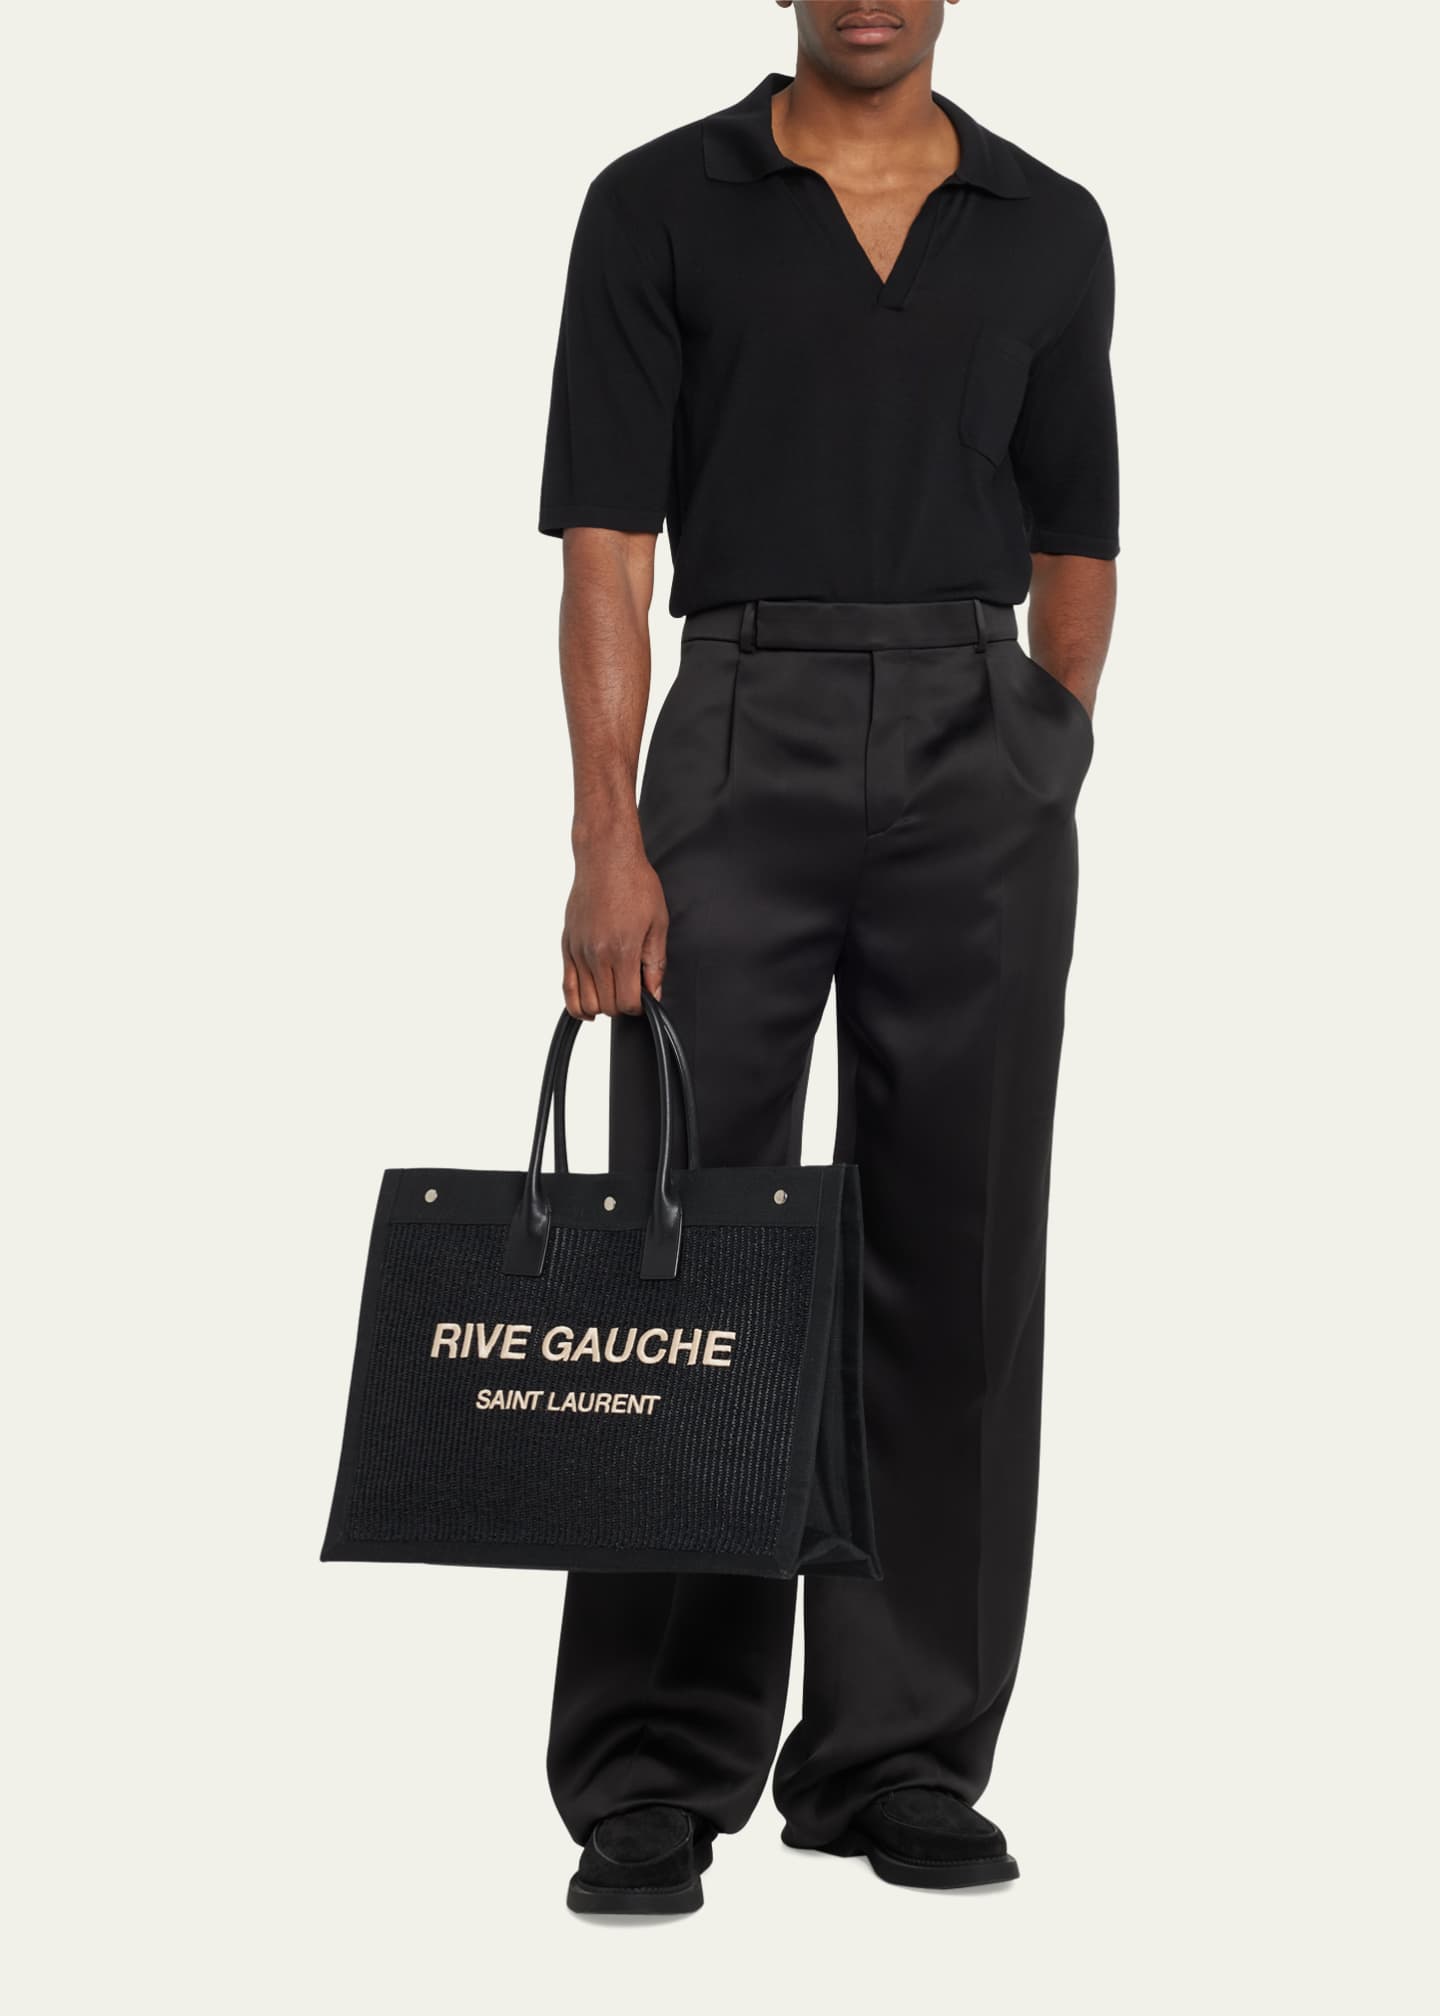 Saint Laurent Rive Gauche Small Tote Bag in Raffia - Bergdorf Goodman